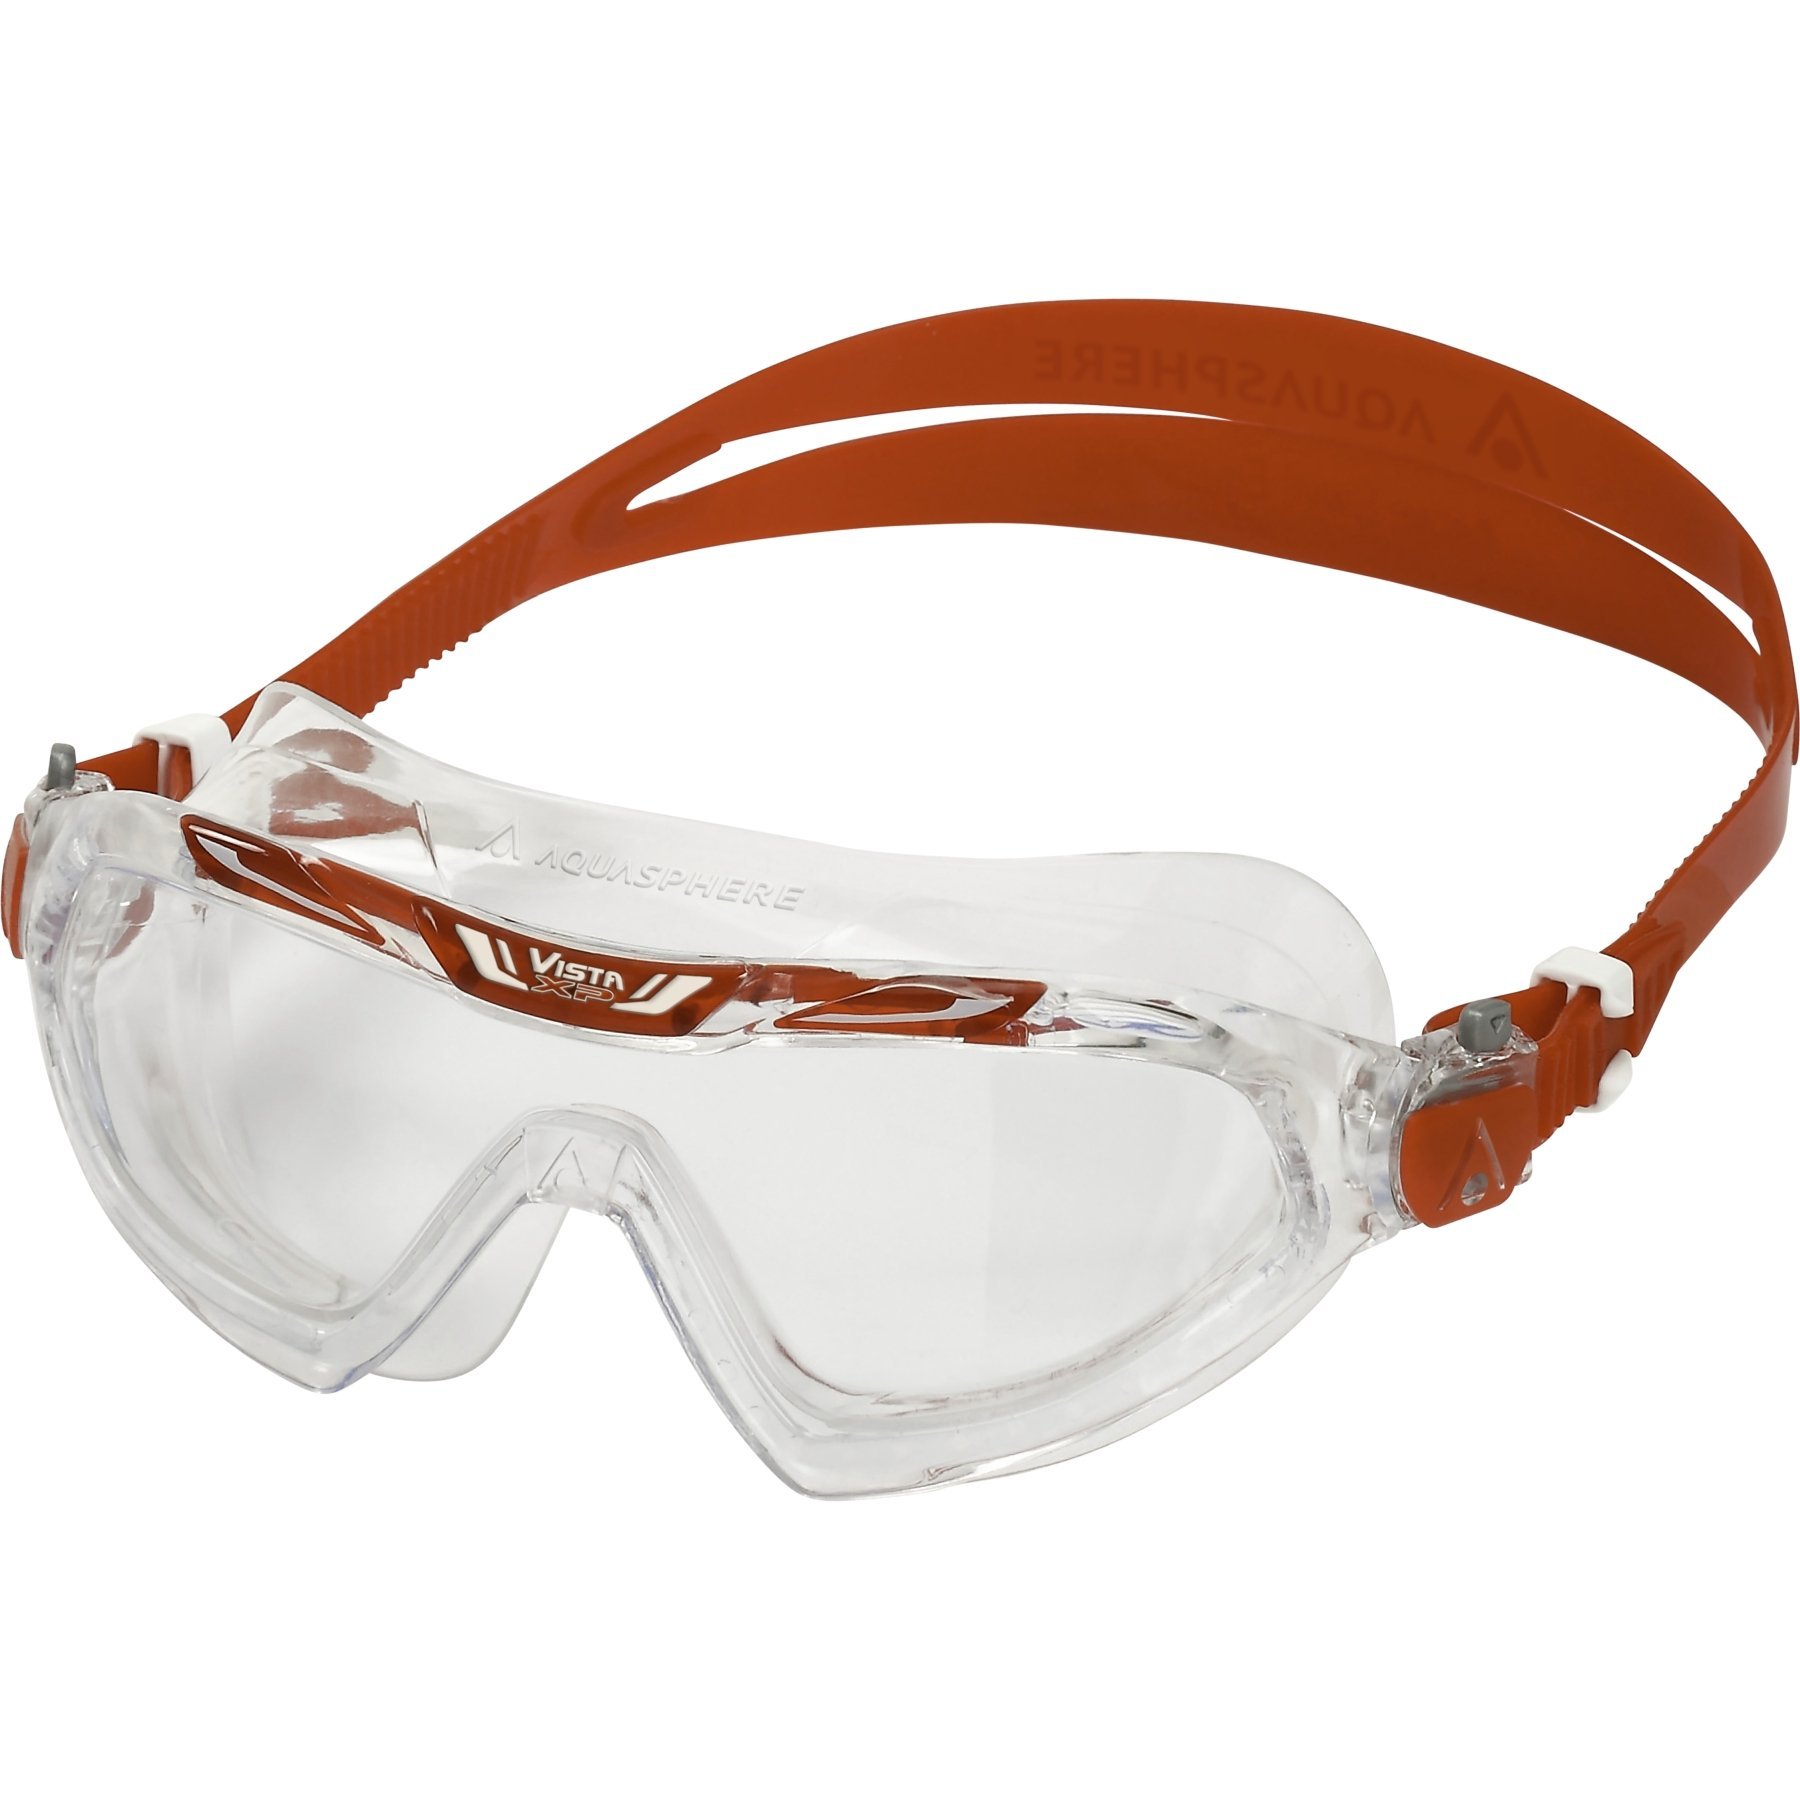 Plavecké okuliare AquaLung VISTA XP - červená